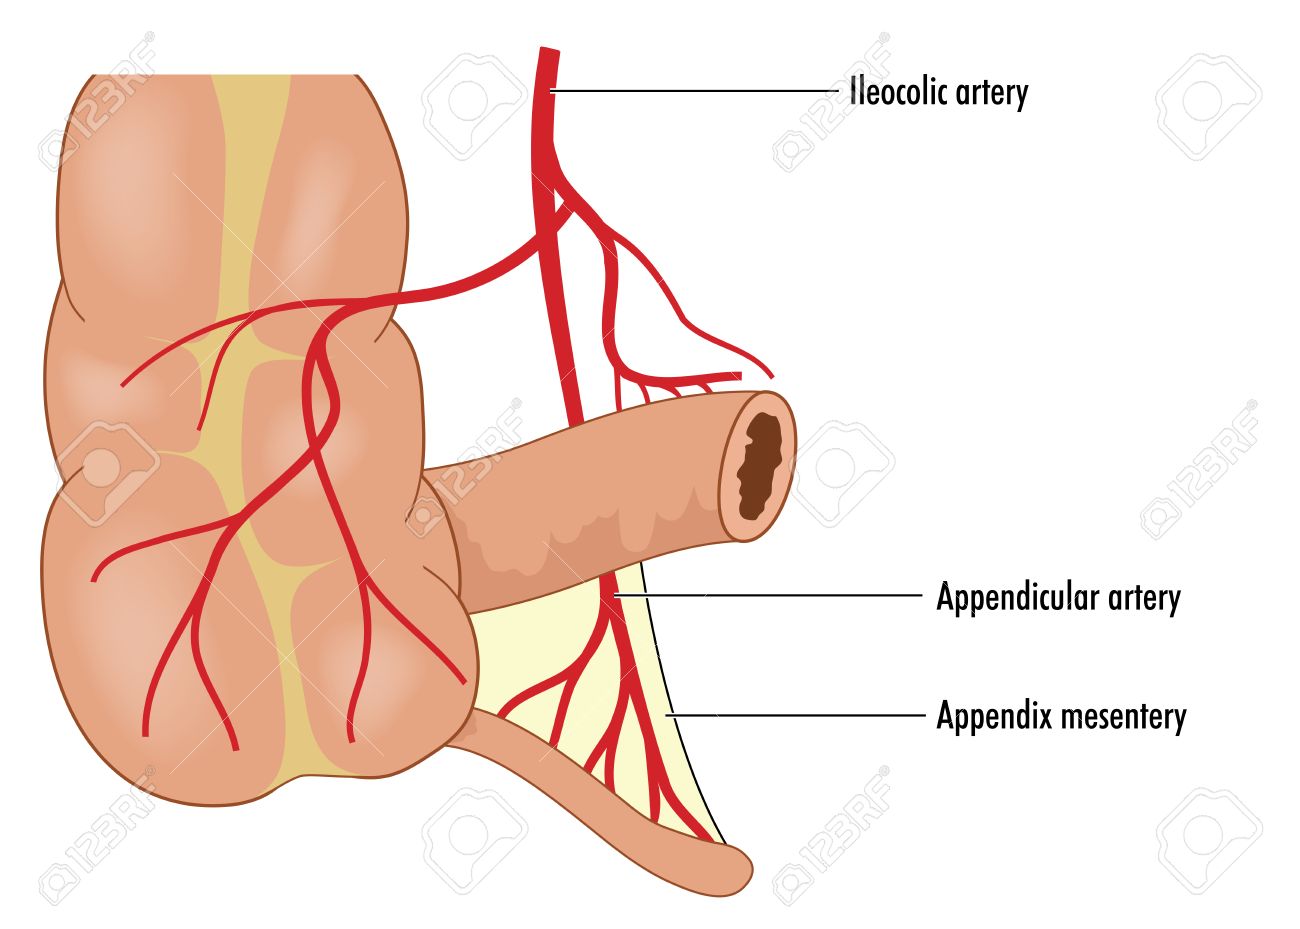 ileocolic artery